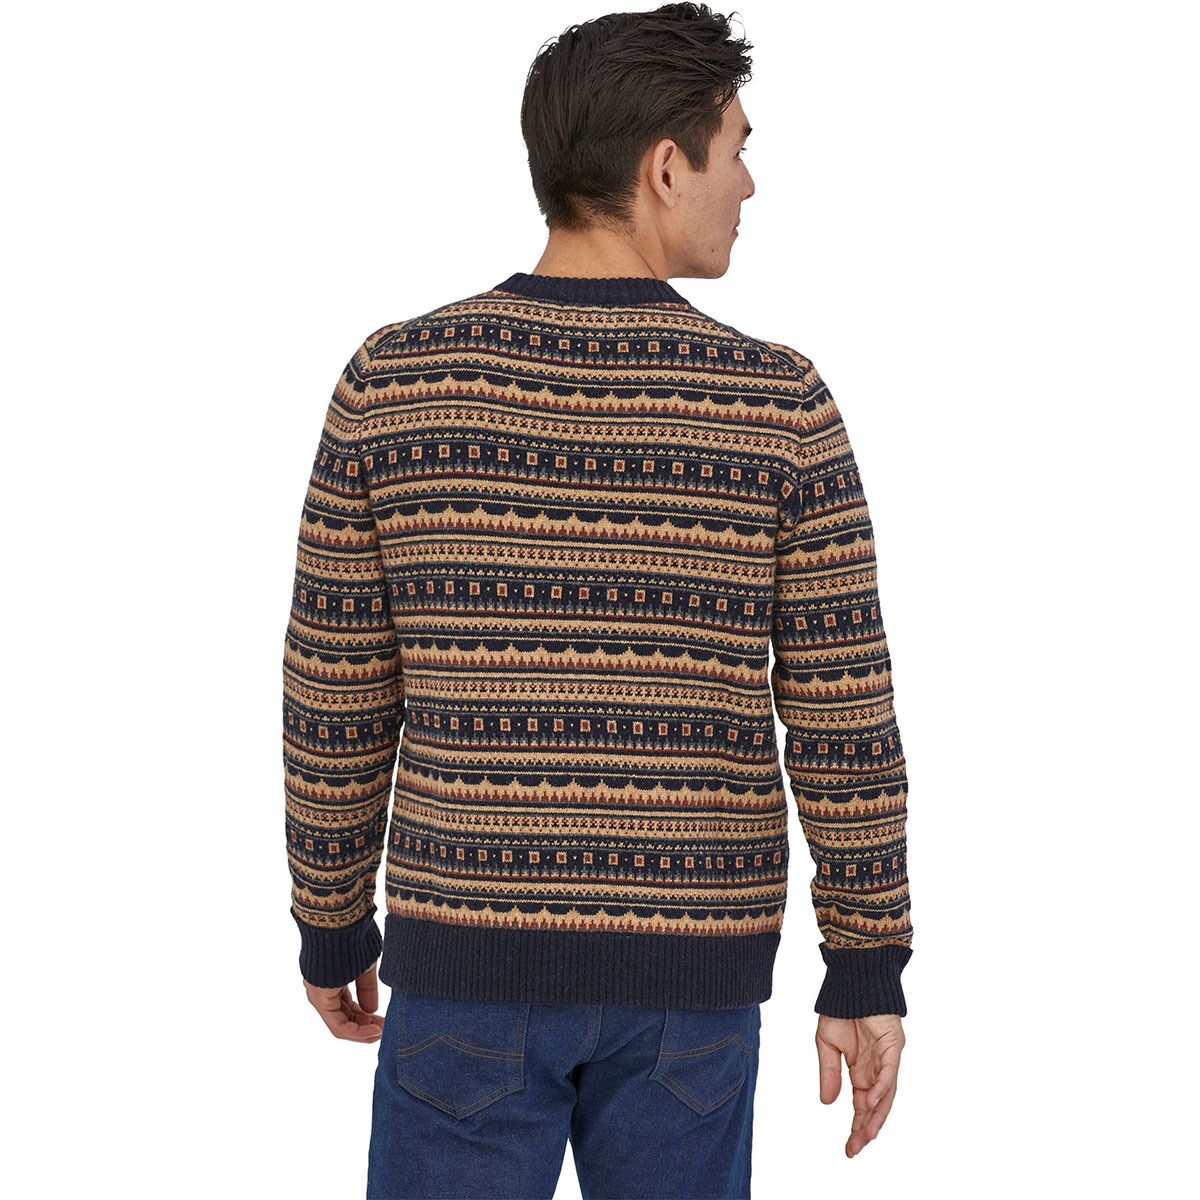 Patagonia Recycled Wool Sweater - Men's